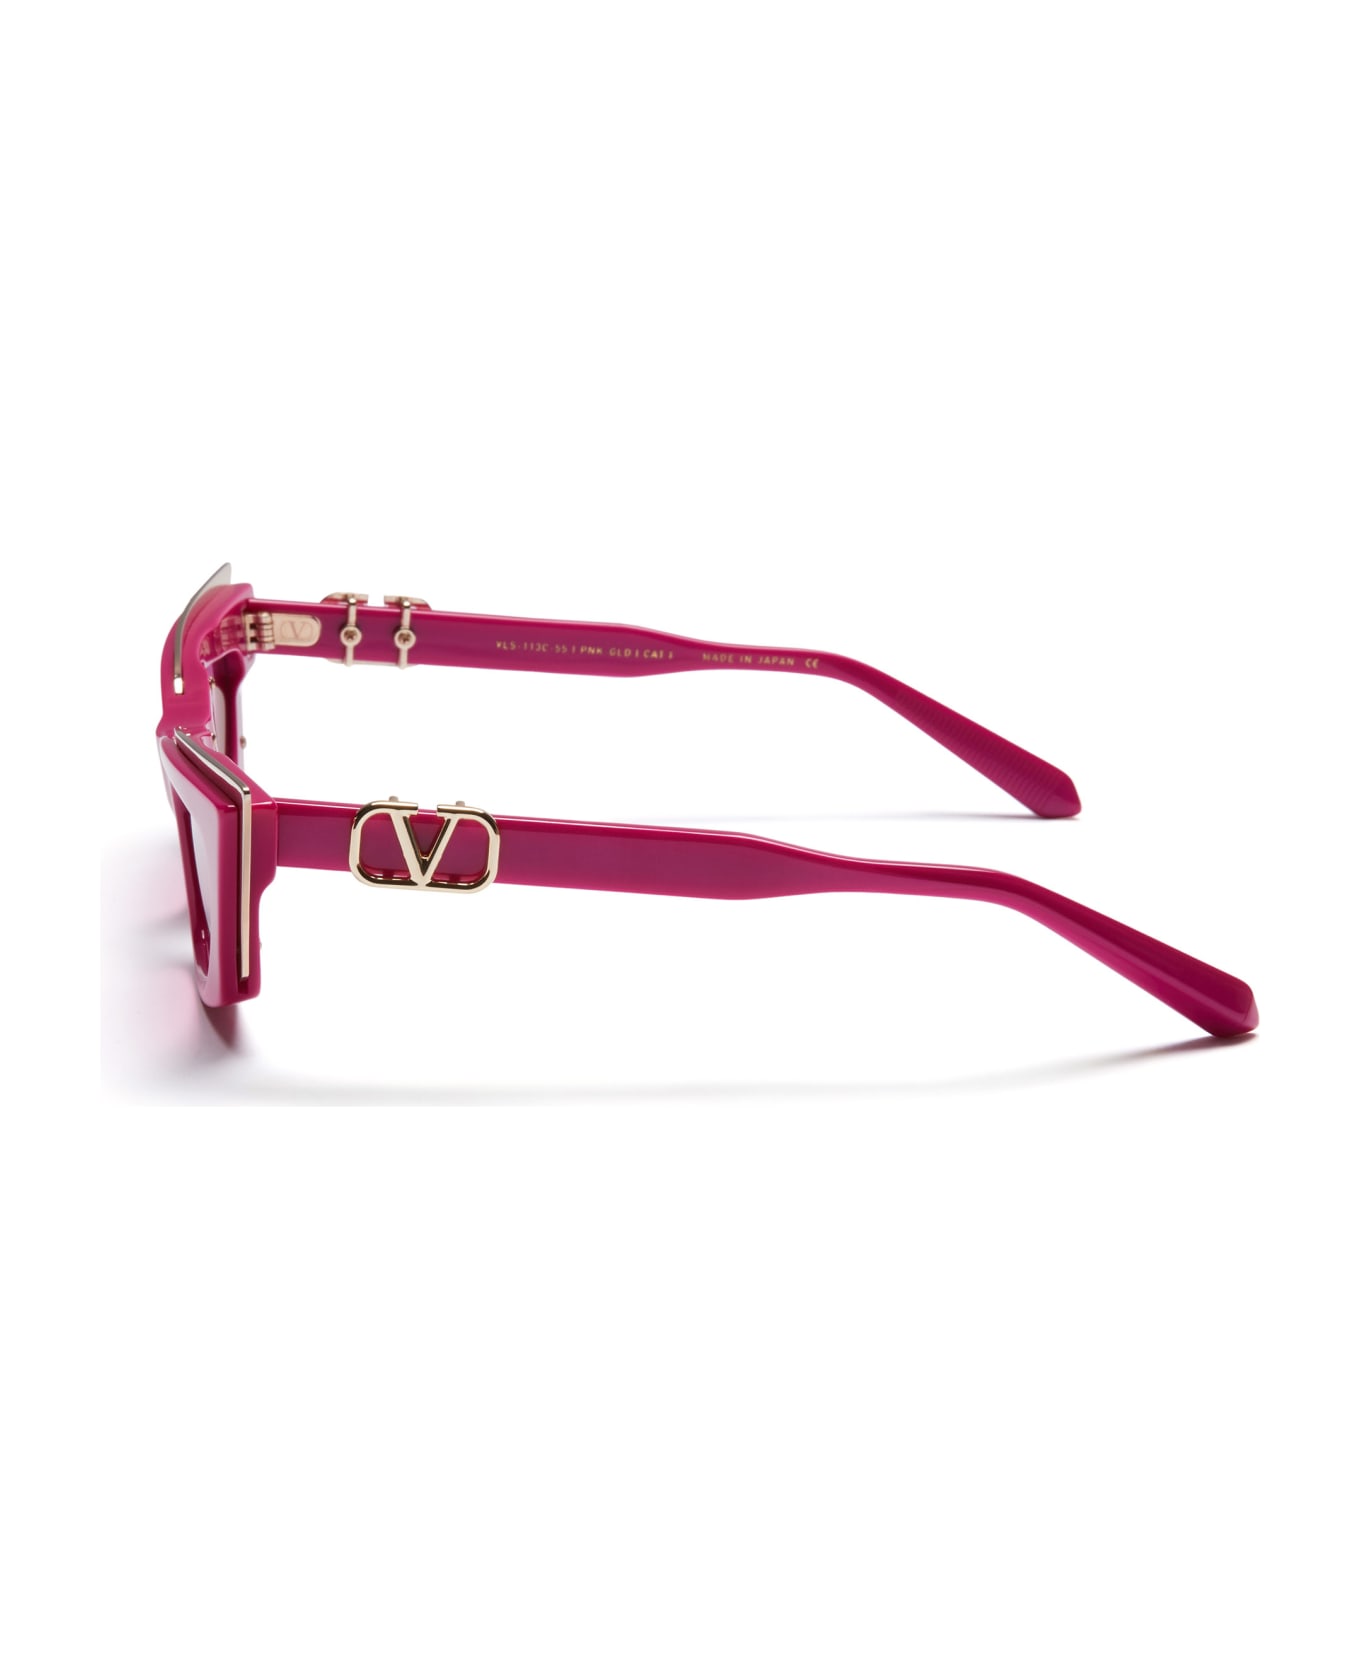 Valentino Eyewear V-goldcut I - Pink / White Gold Sunglasses - pink